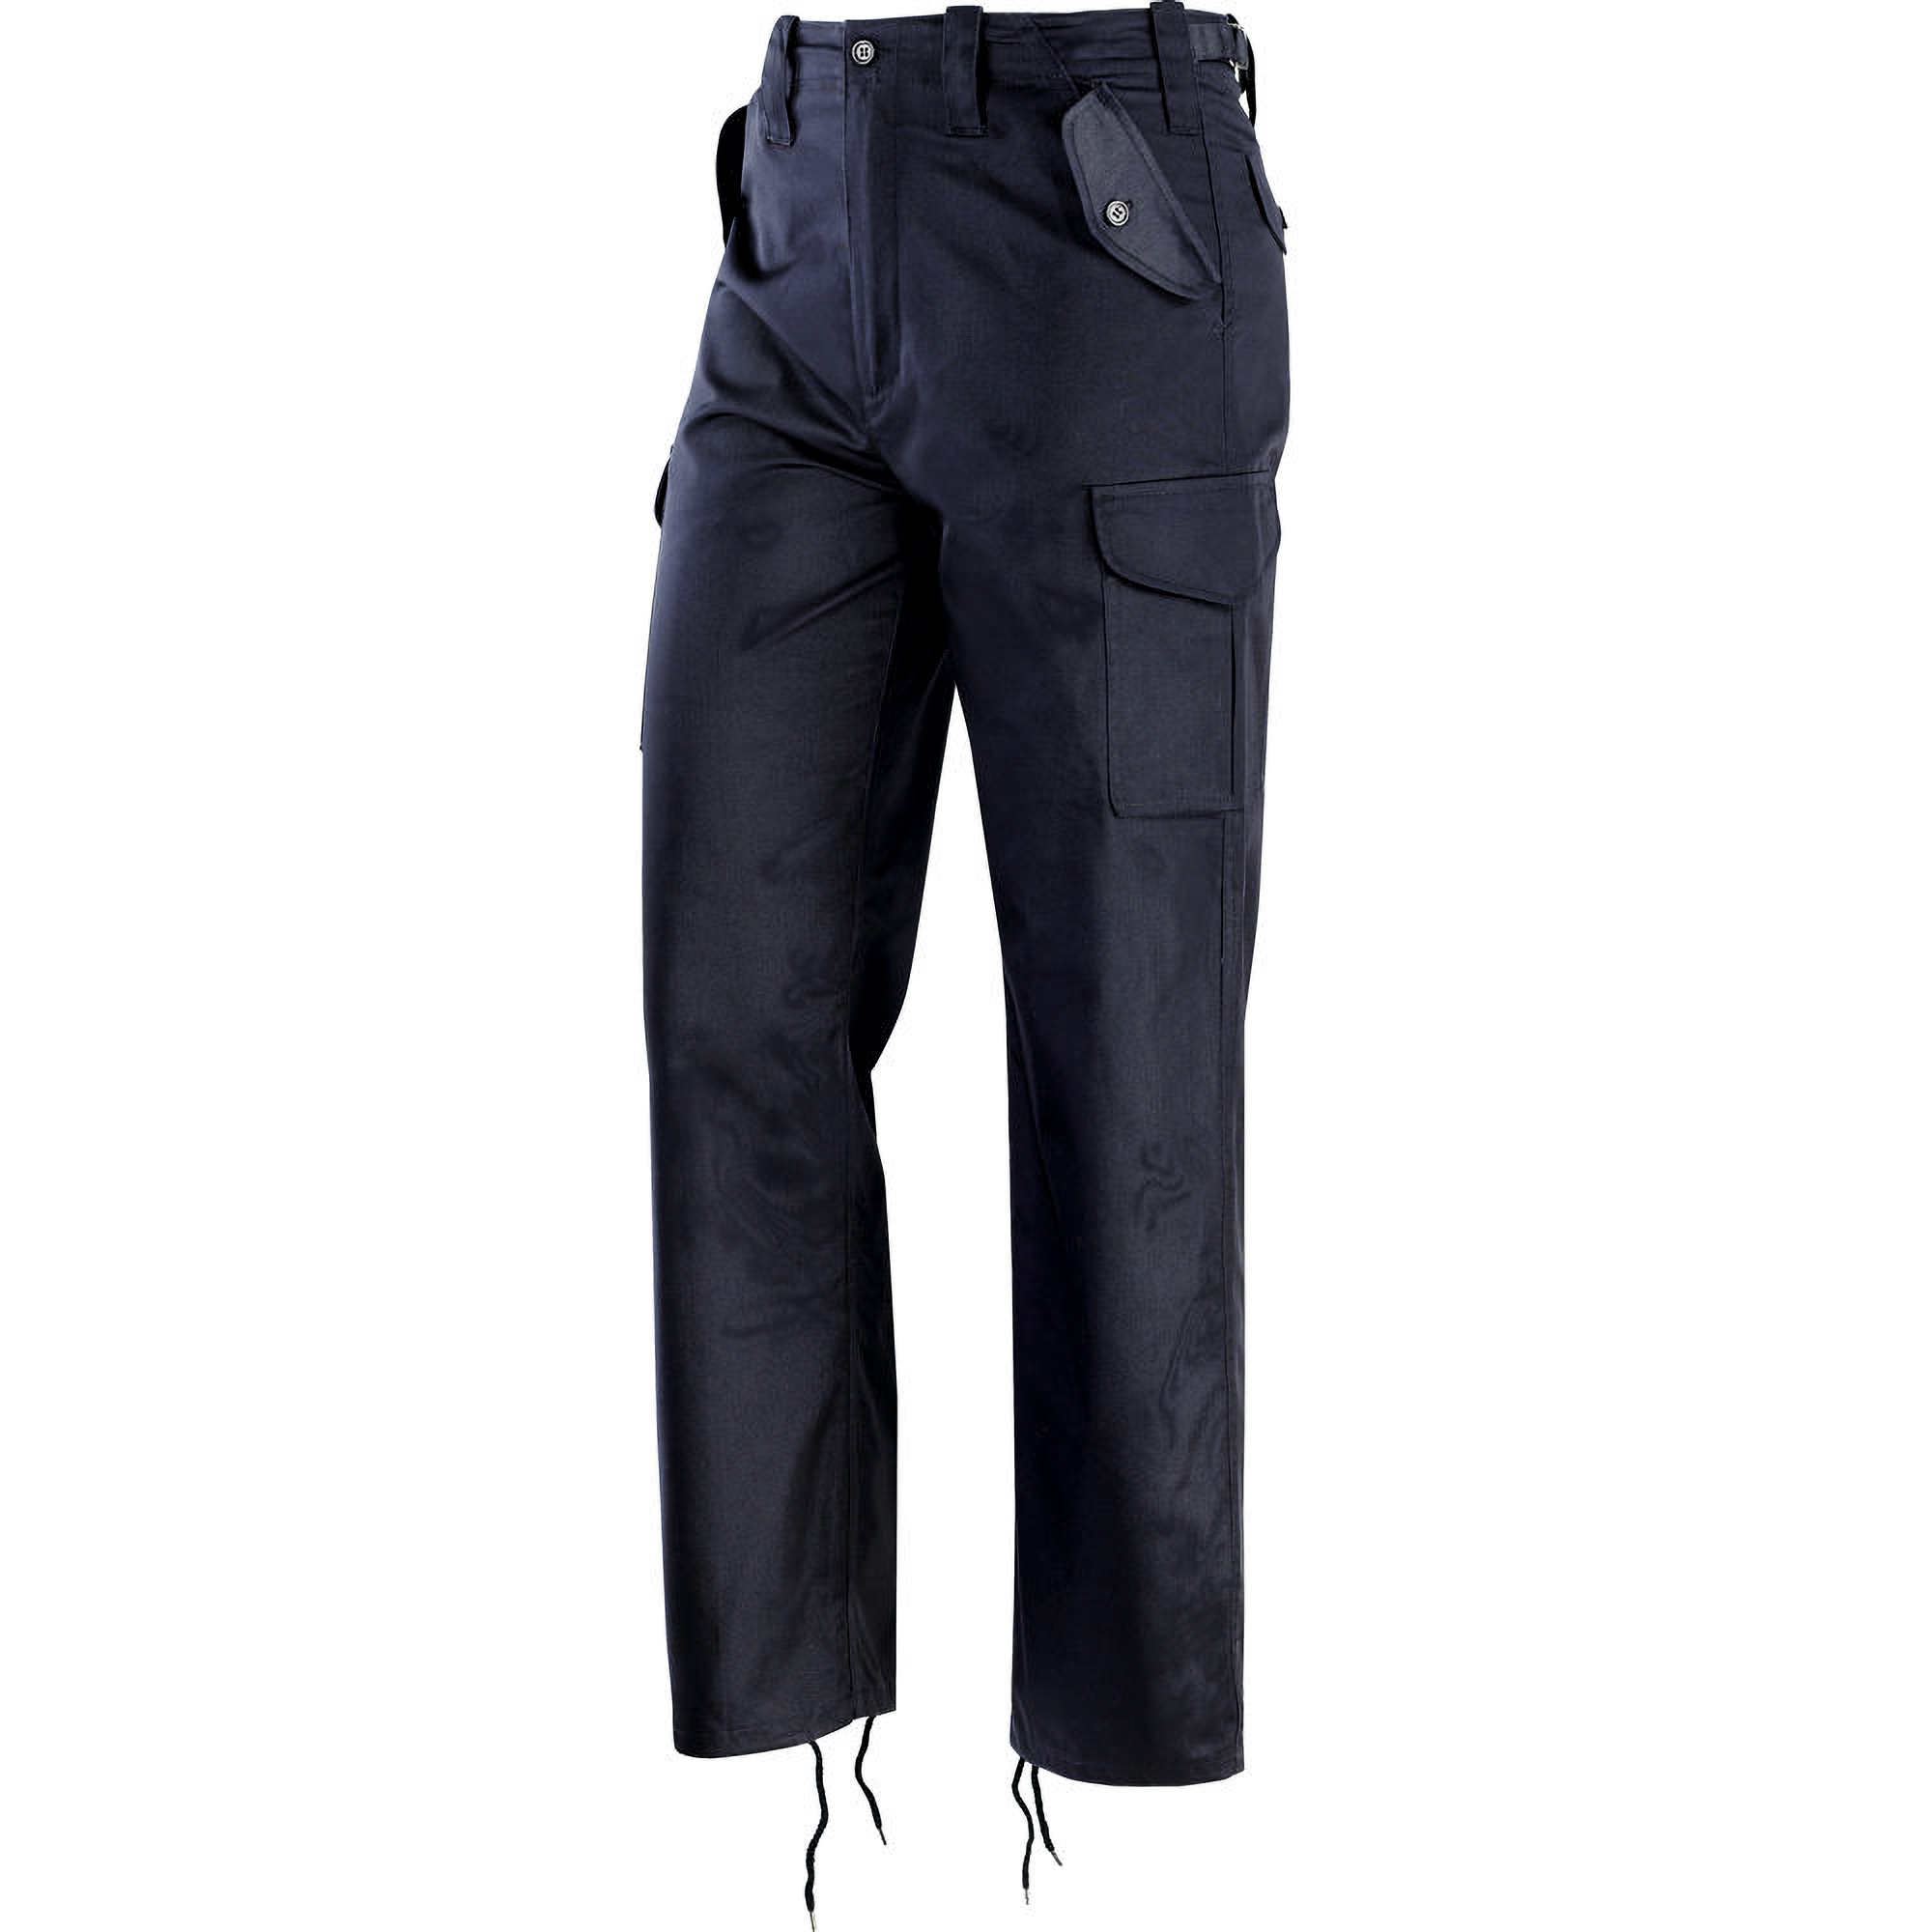 Pantaloni Neri Spa Army 437048, funzionalit e Vestibilit